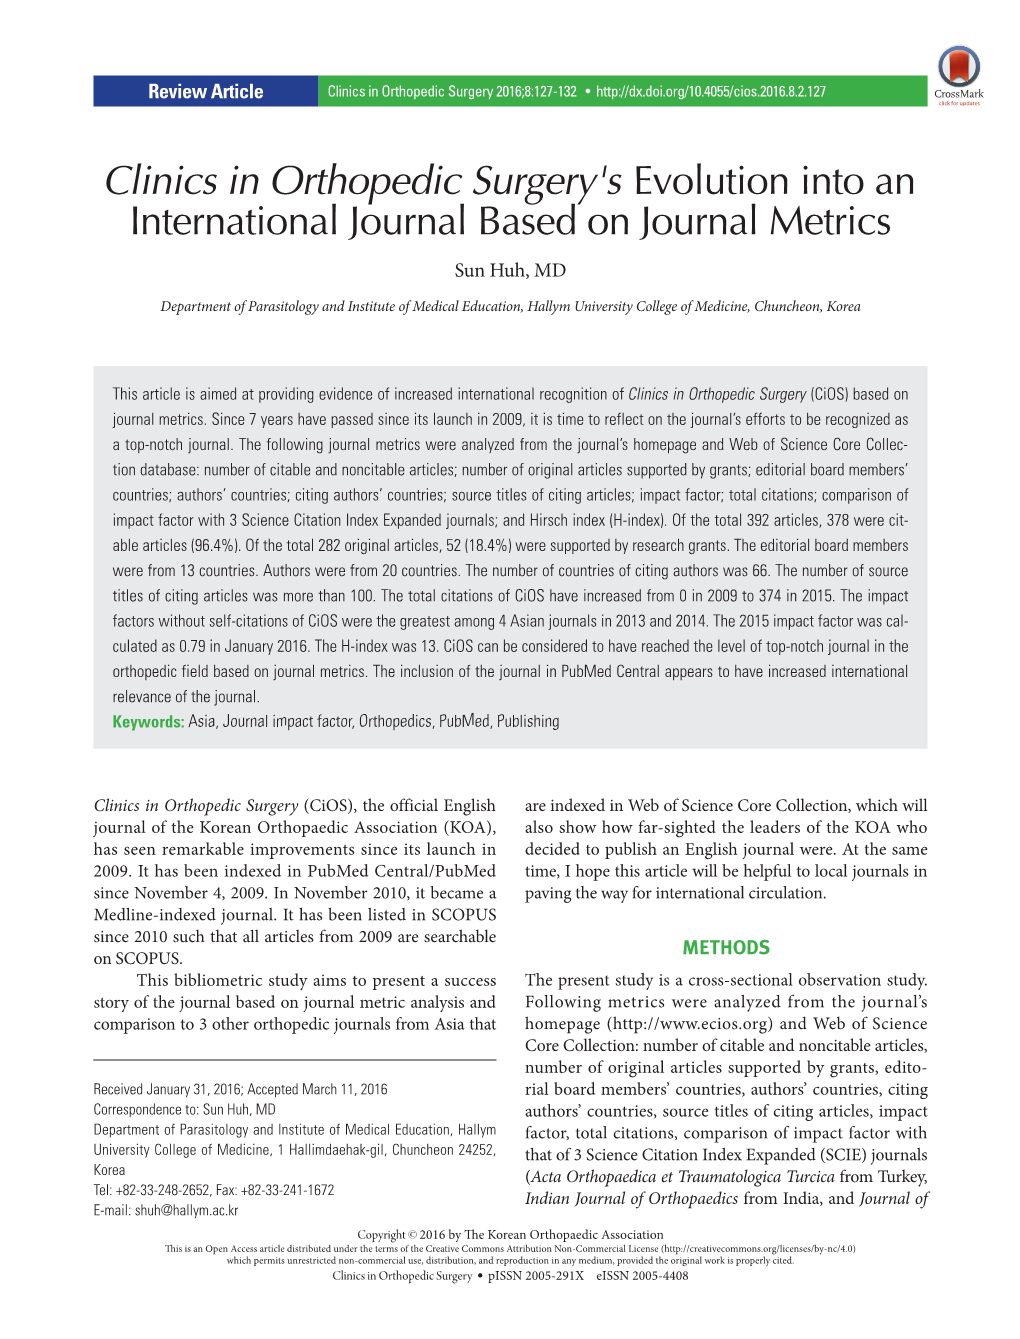 Clinics in Orthopedic Surgery's Evolution Into an International Journal Based on Journal Metrics Sun Huh, MD